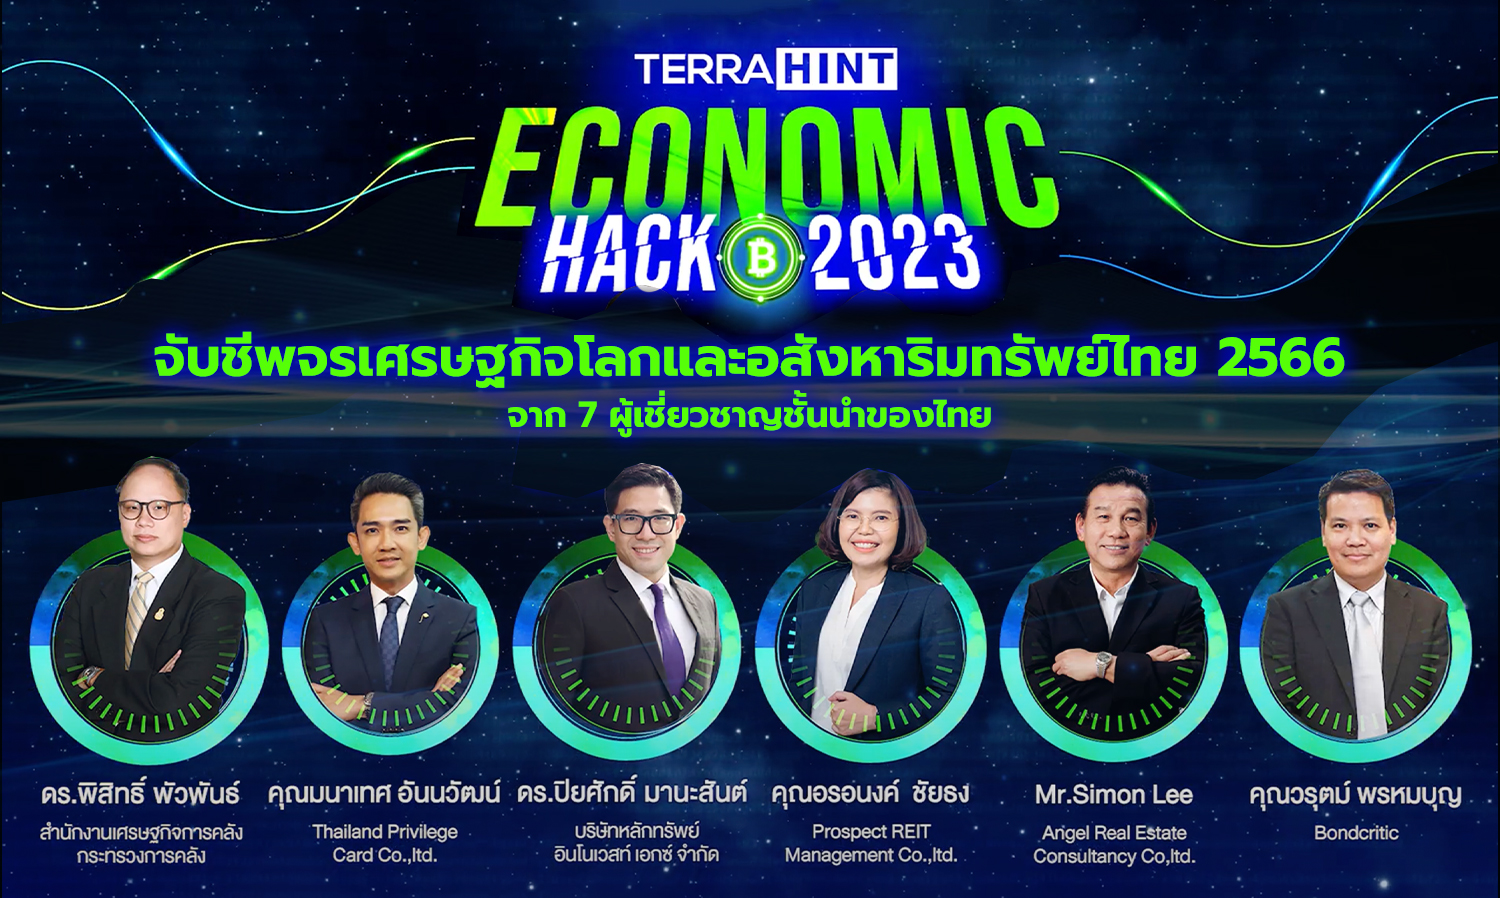 TERRA HINT : ECONOMIC HACK 2023 จับชีพจรเศรษฐกิจโลกและอสังหาริมทรัพย์ไทย 2566 จาก 7 ผู้เชี่ยวชาญชั้นนำของไทย